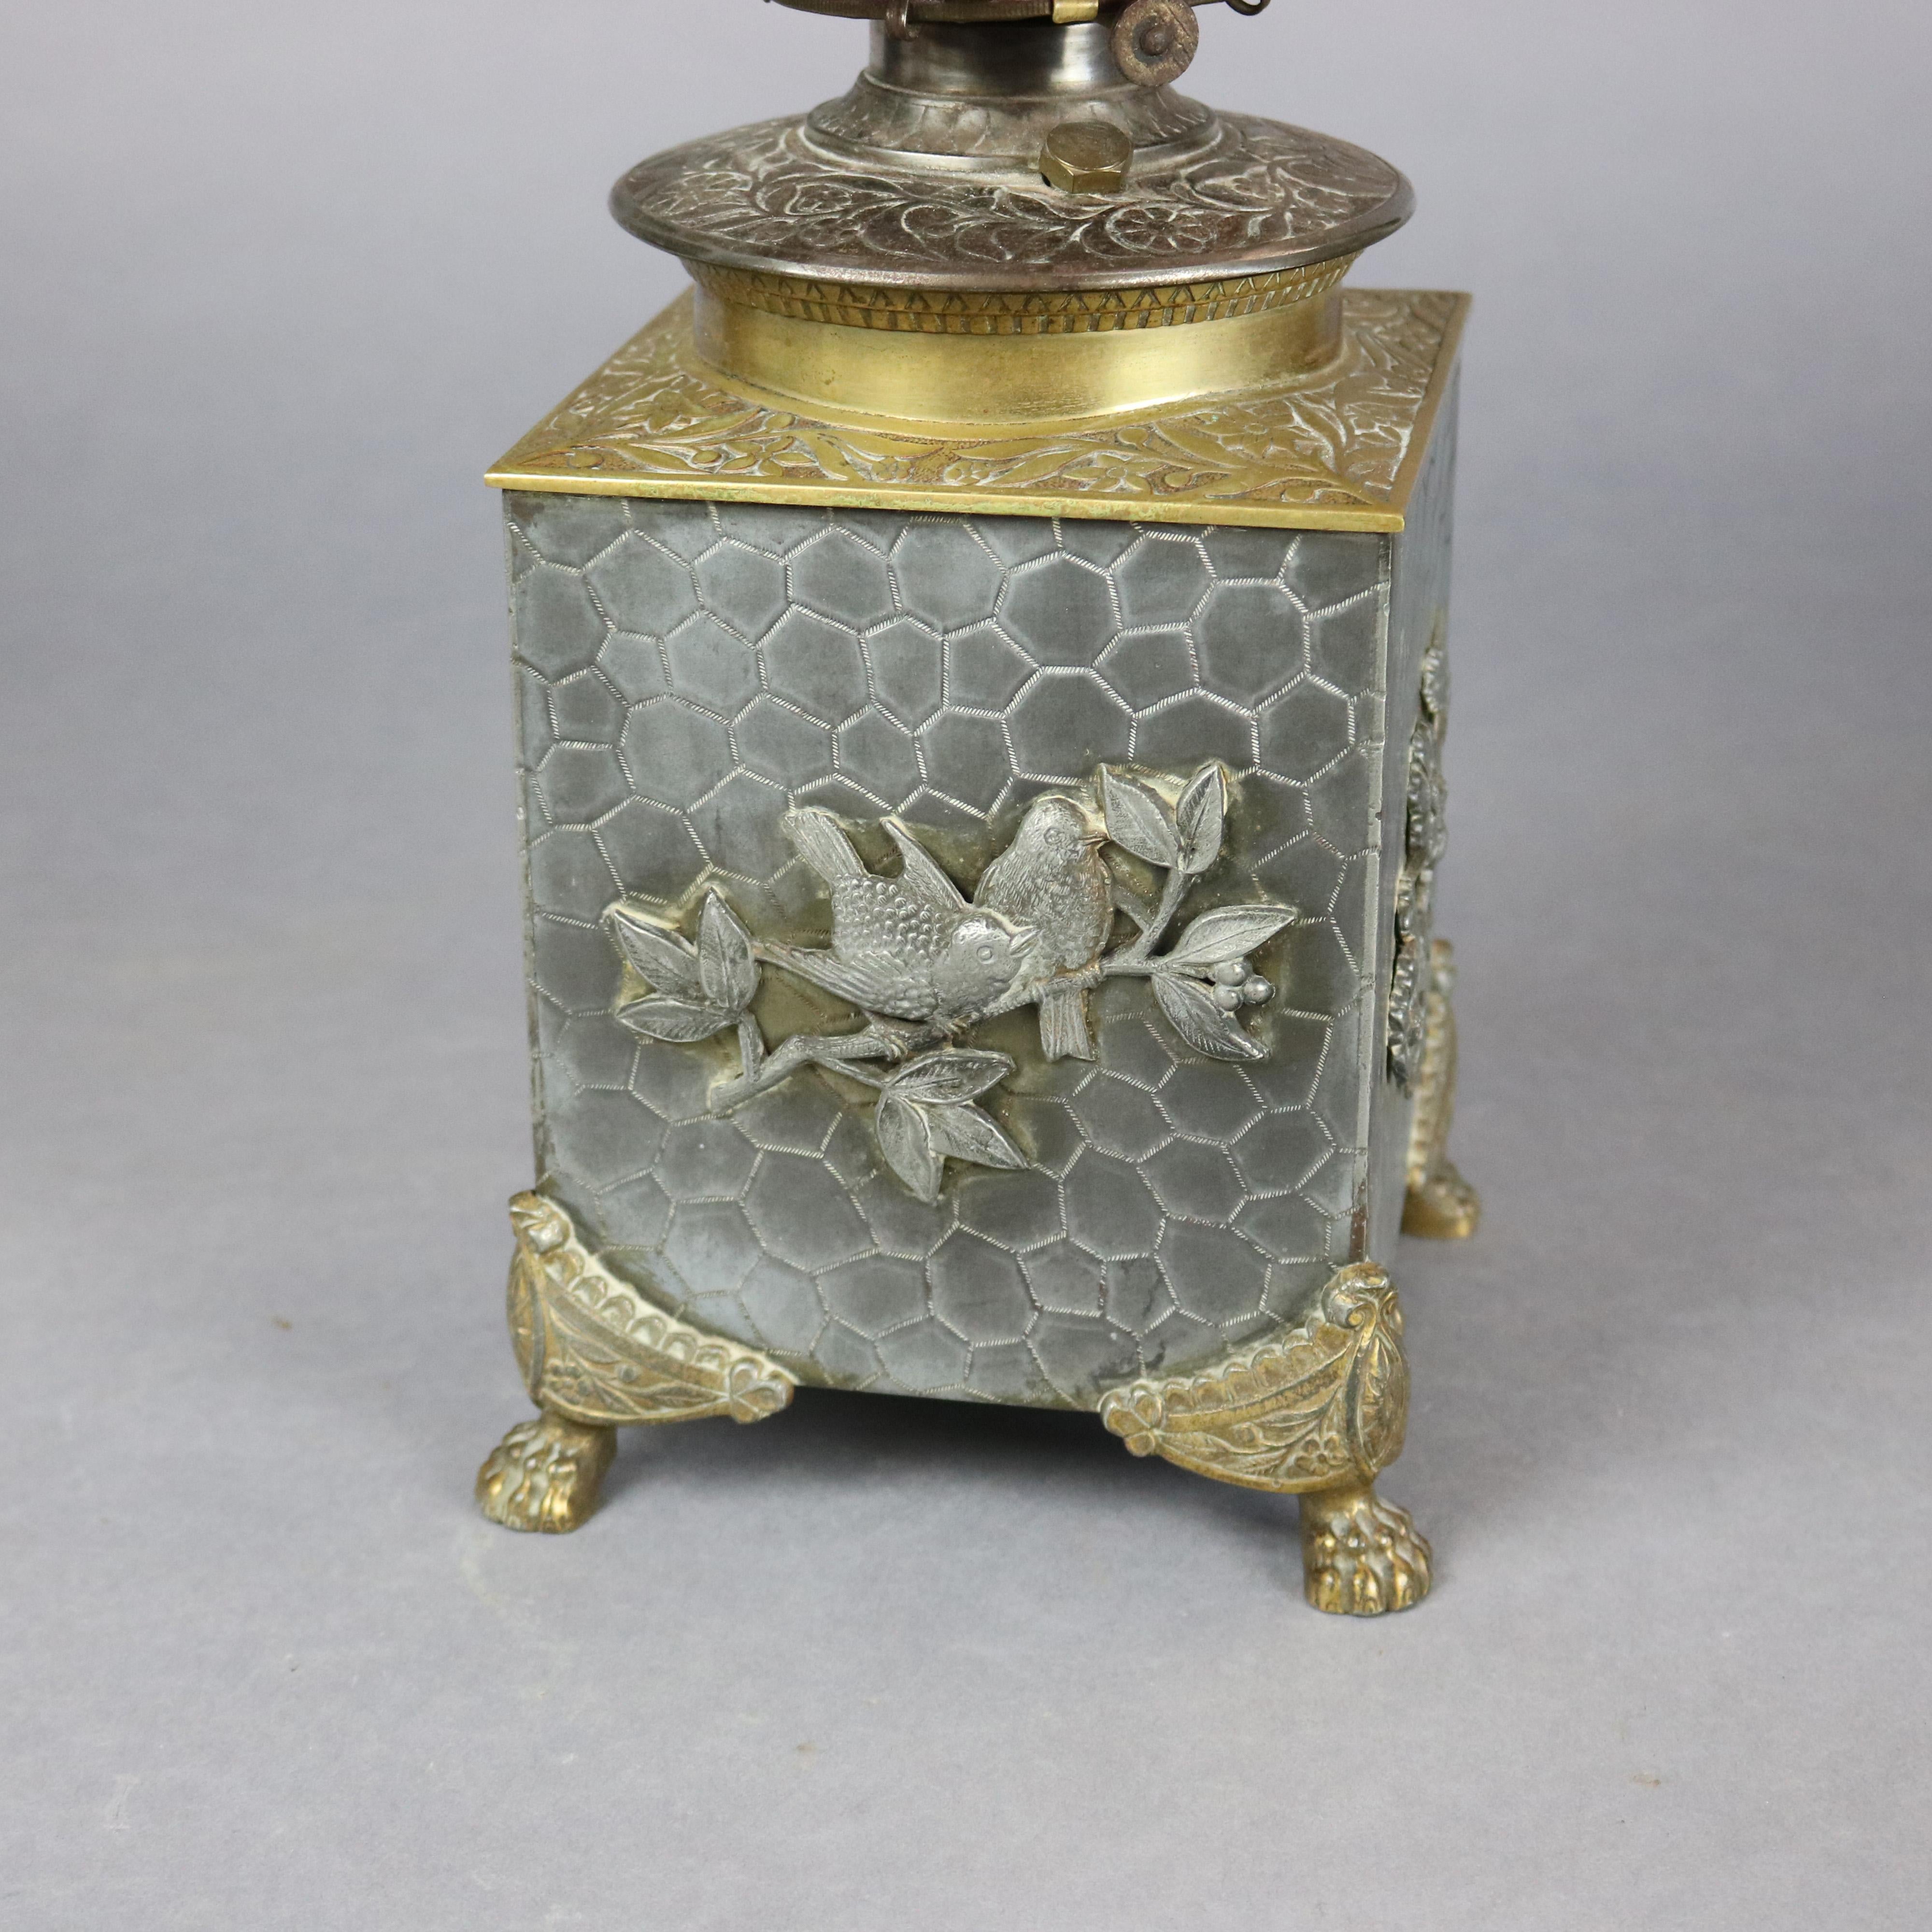 American Aesthetic Silver & Gilt Metal Oil Lamp, Cranberry Swirl Glass Shade, circa 1870